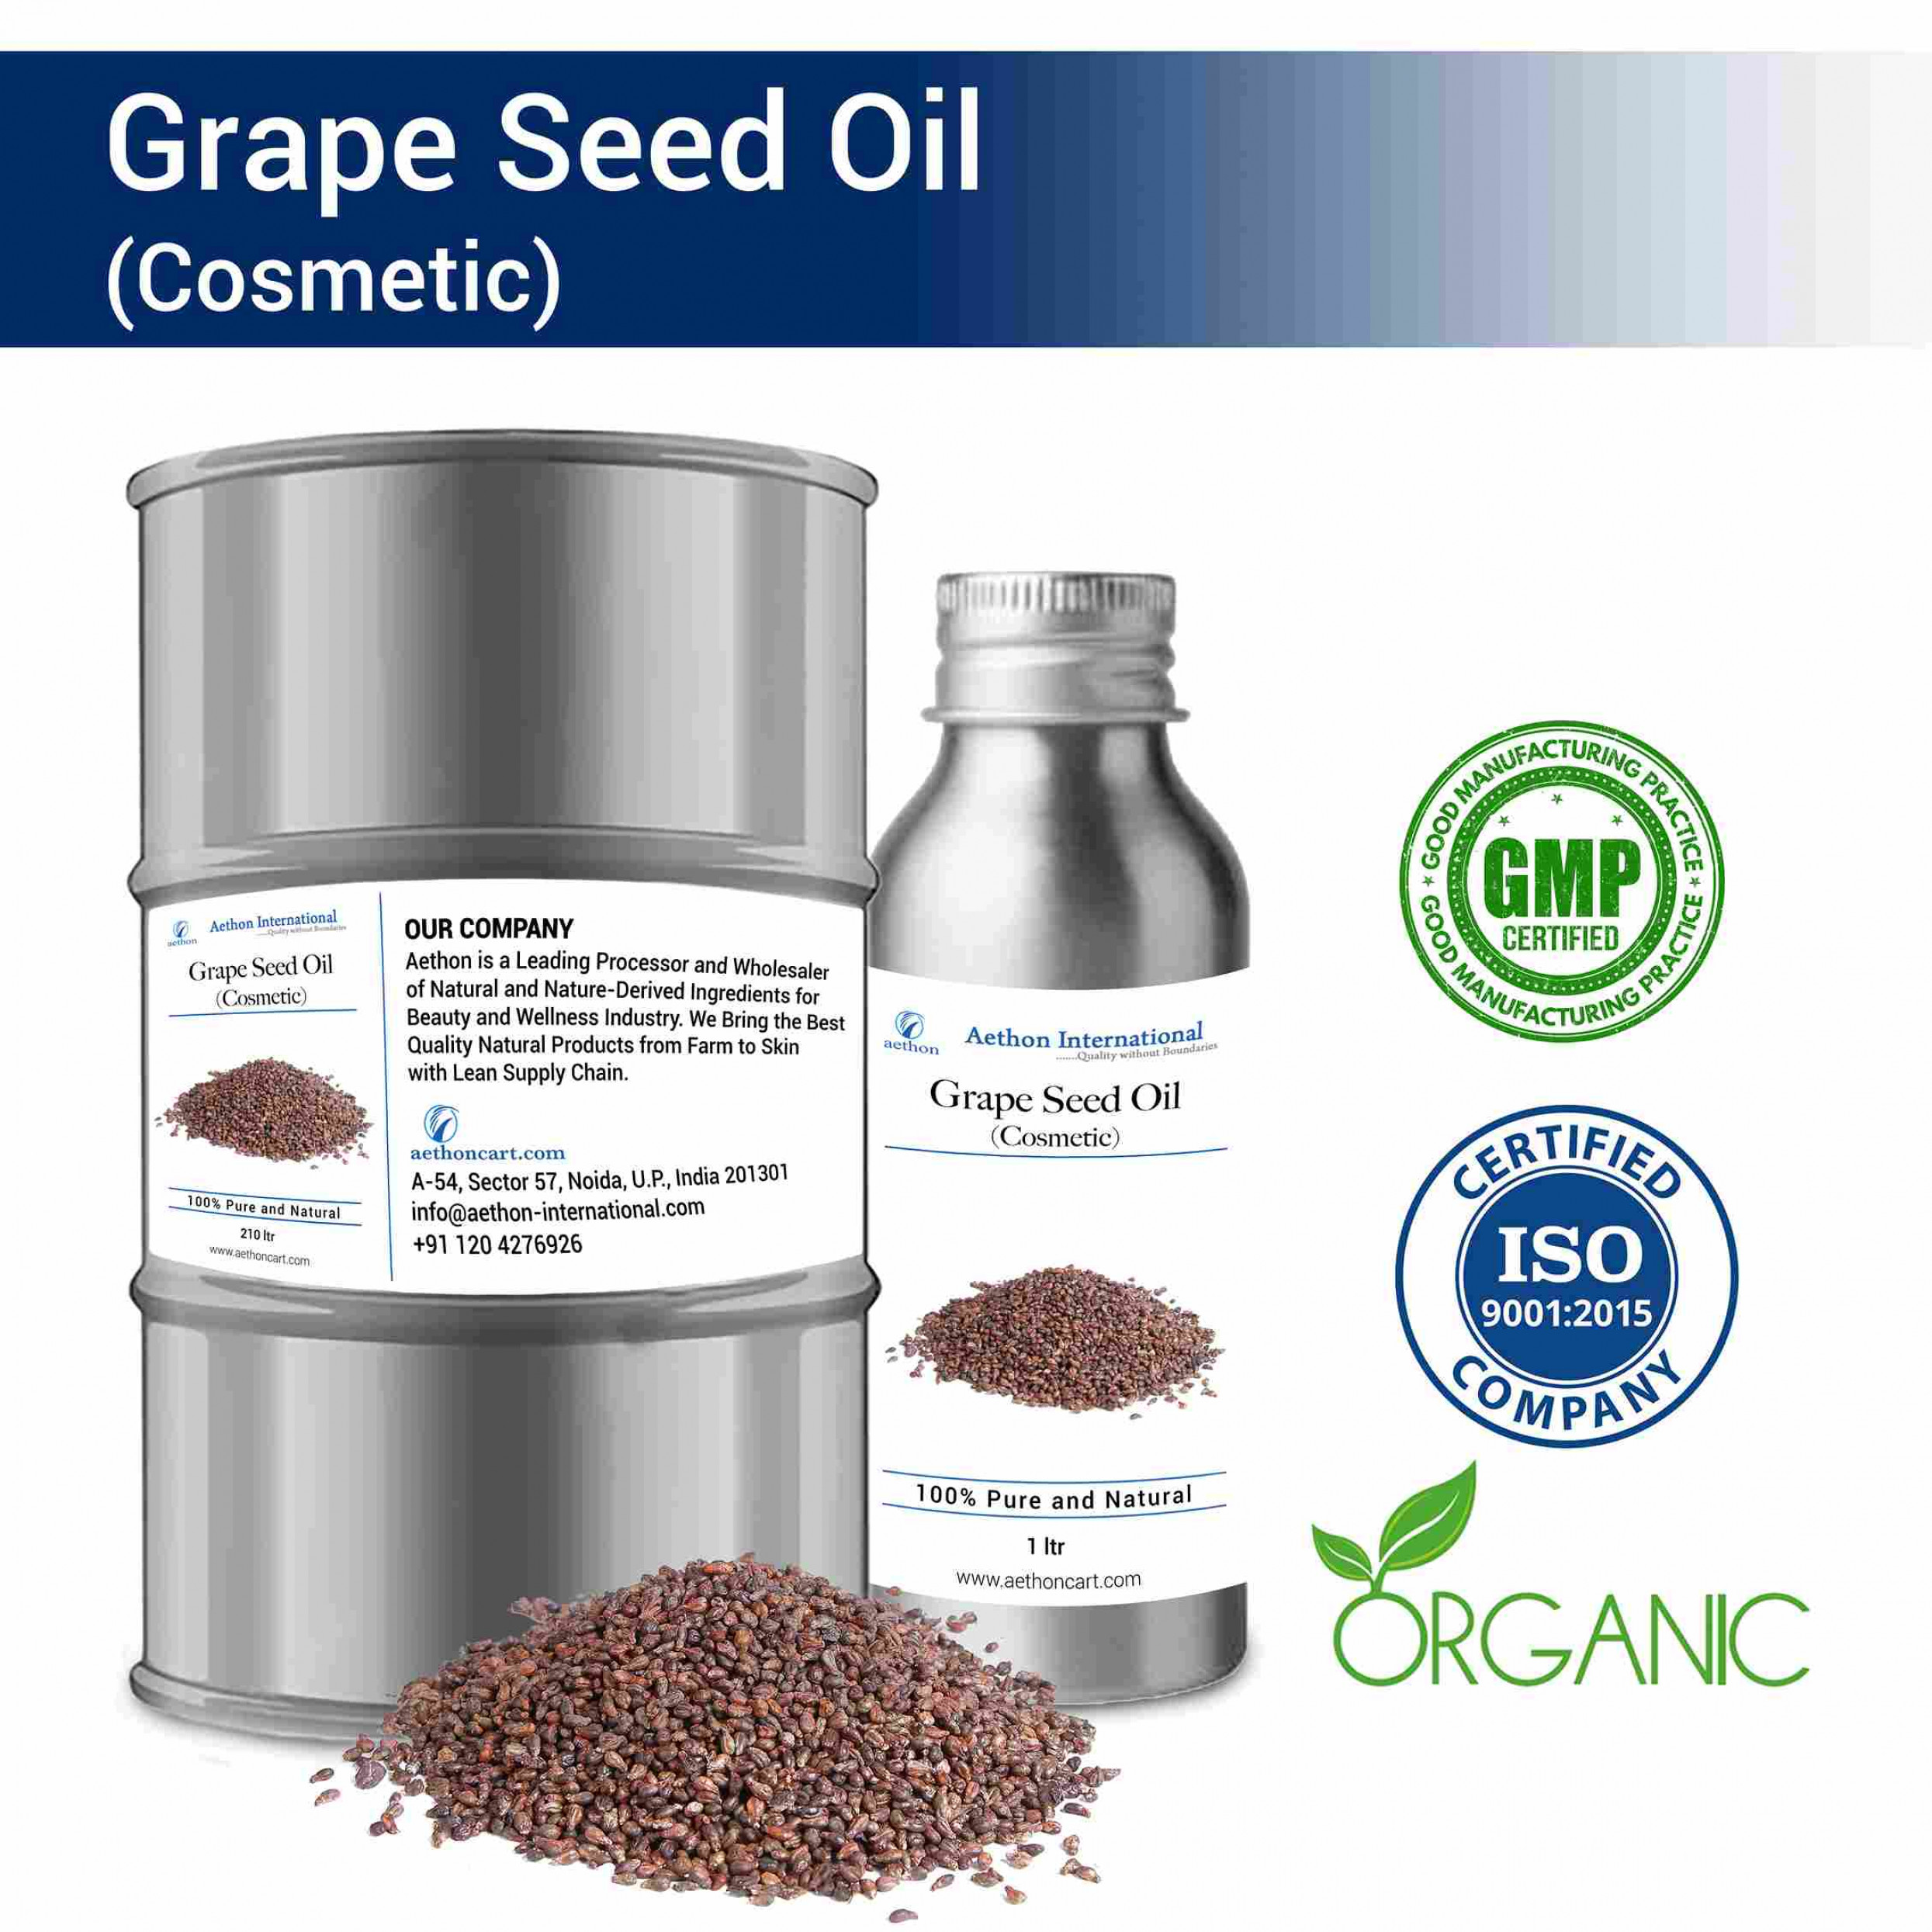 Grape Seed Oil (Cosmetic)